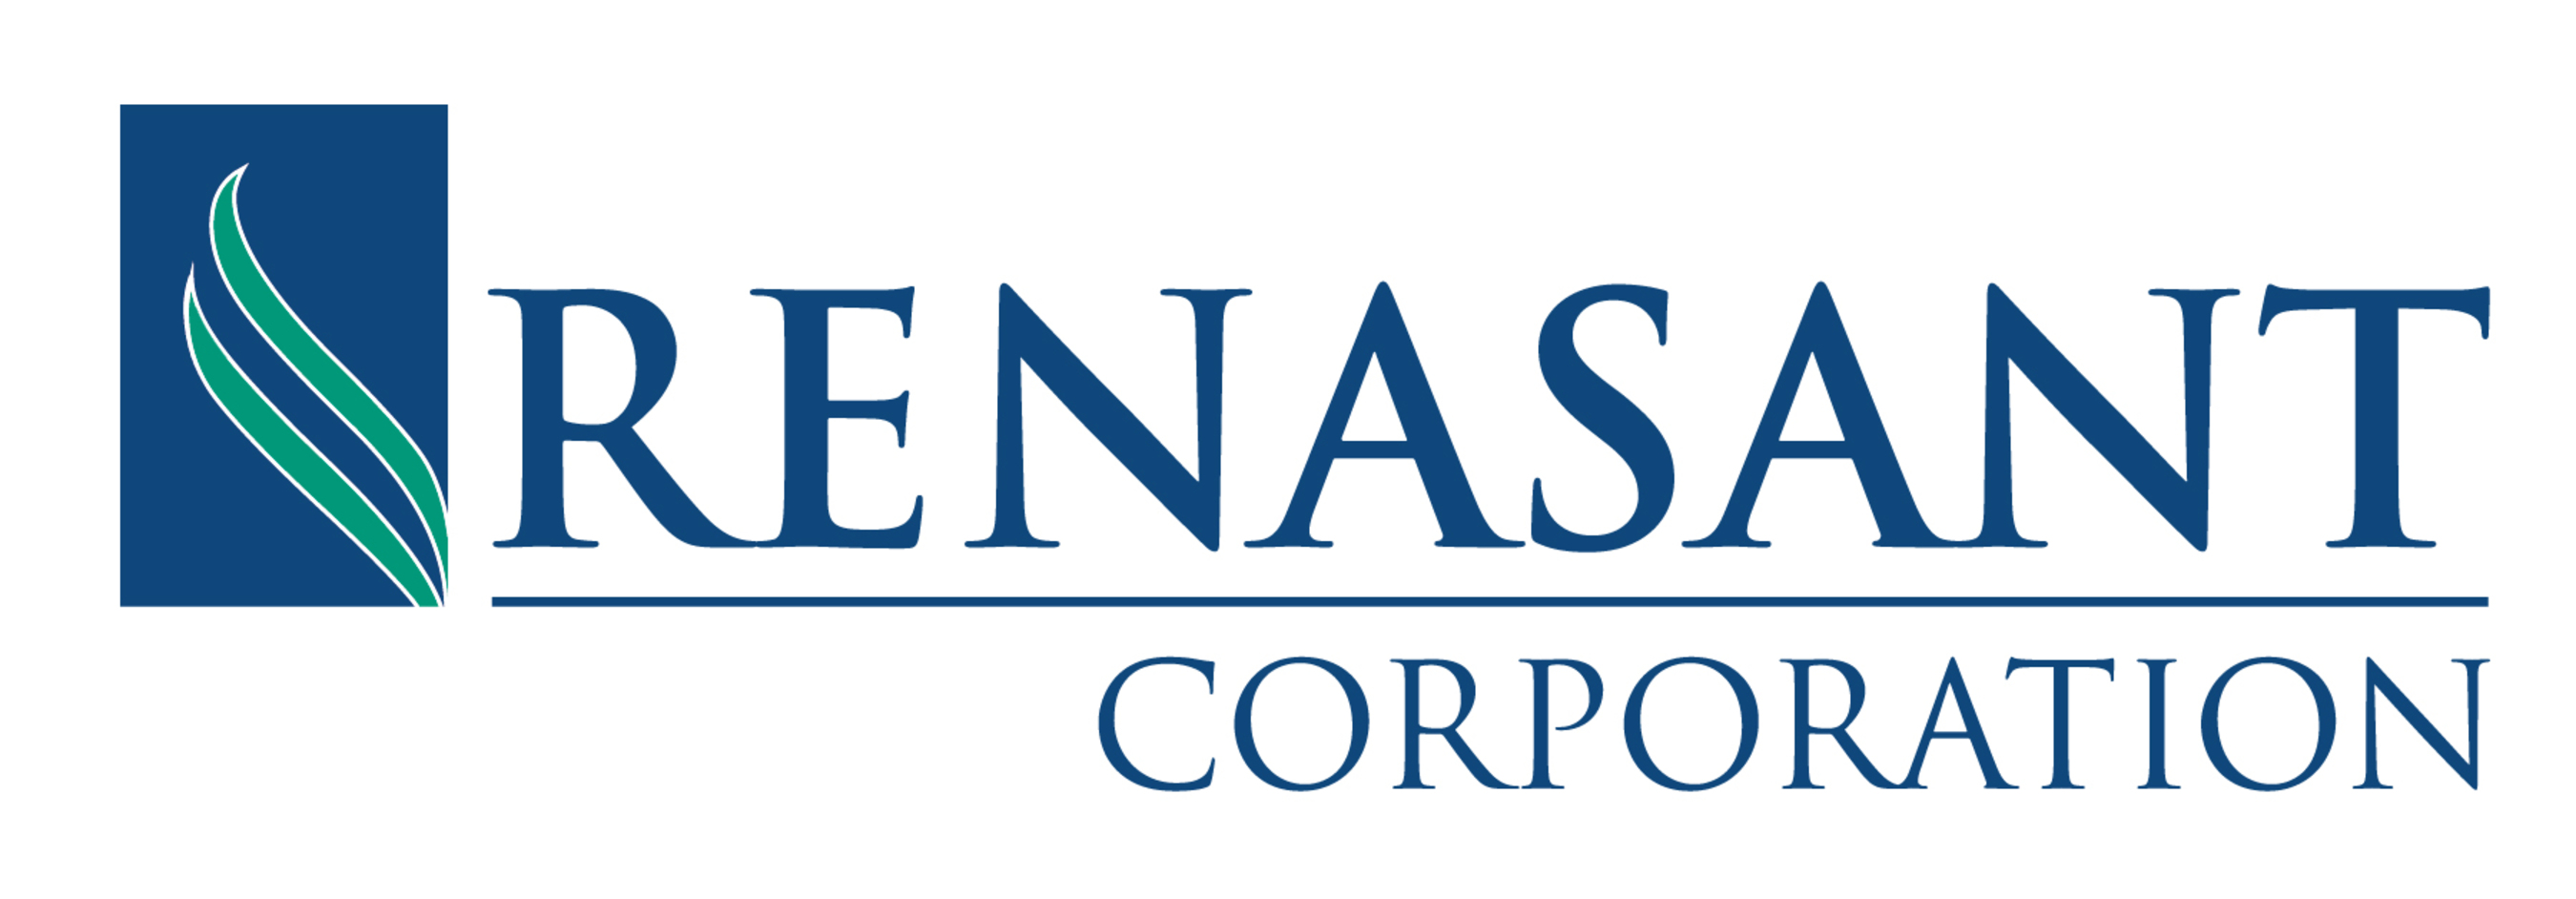 Renasant Corporation logo